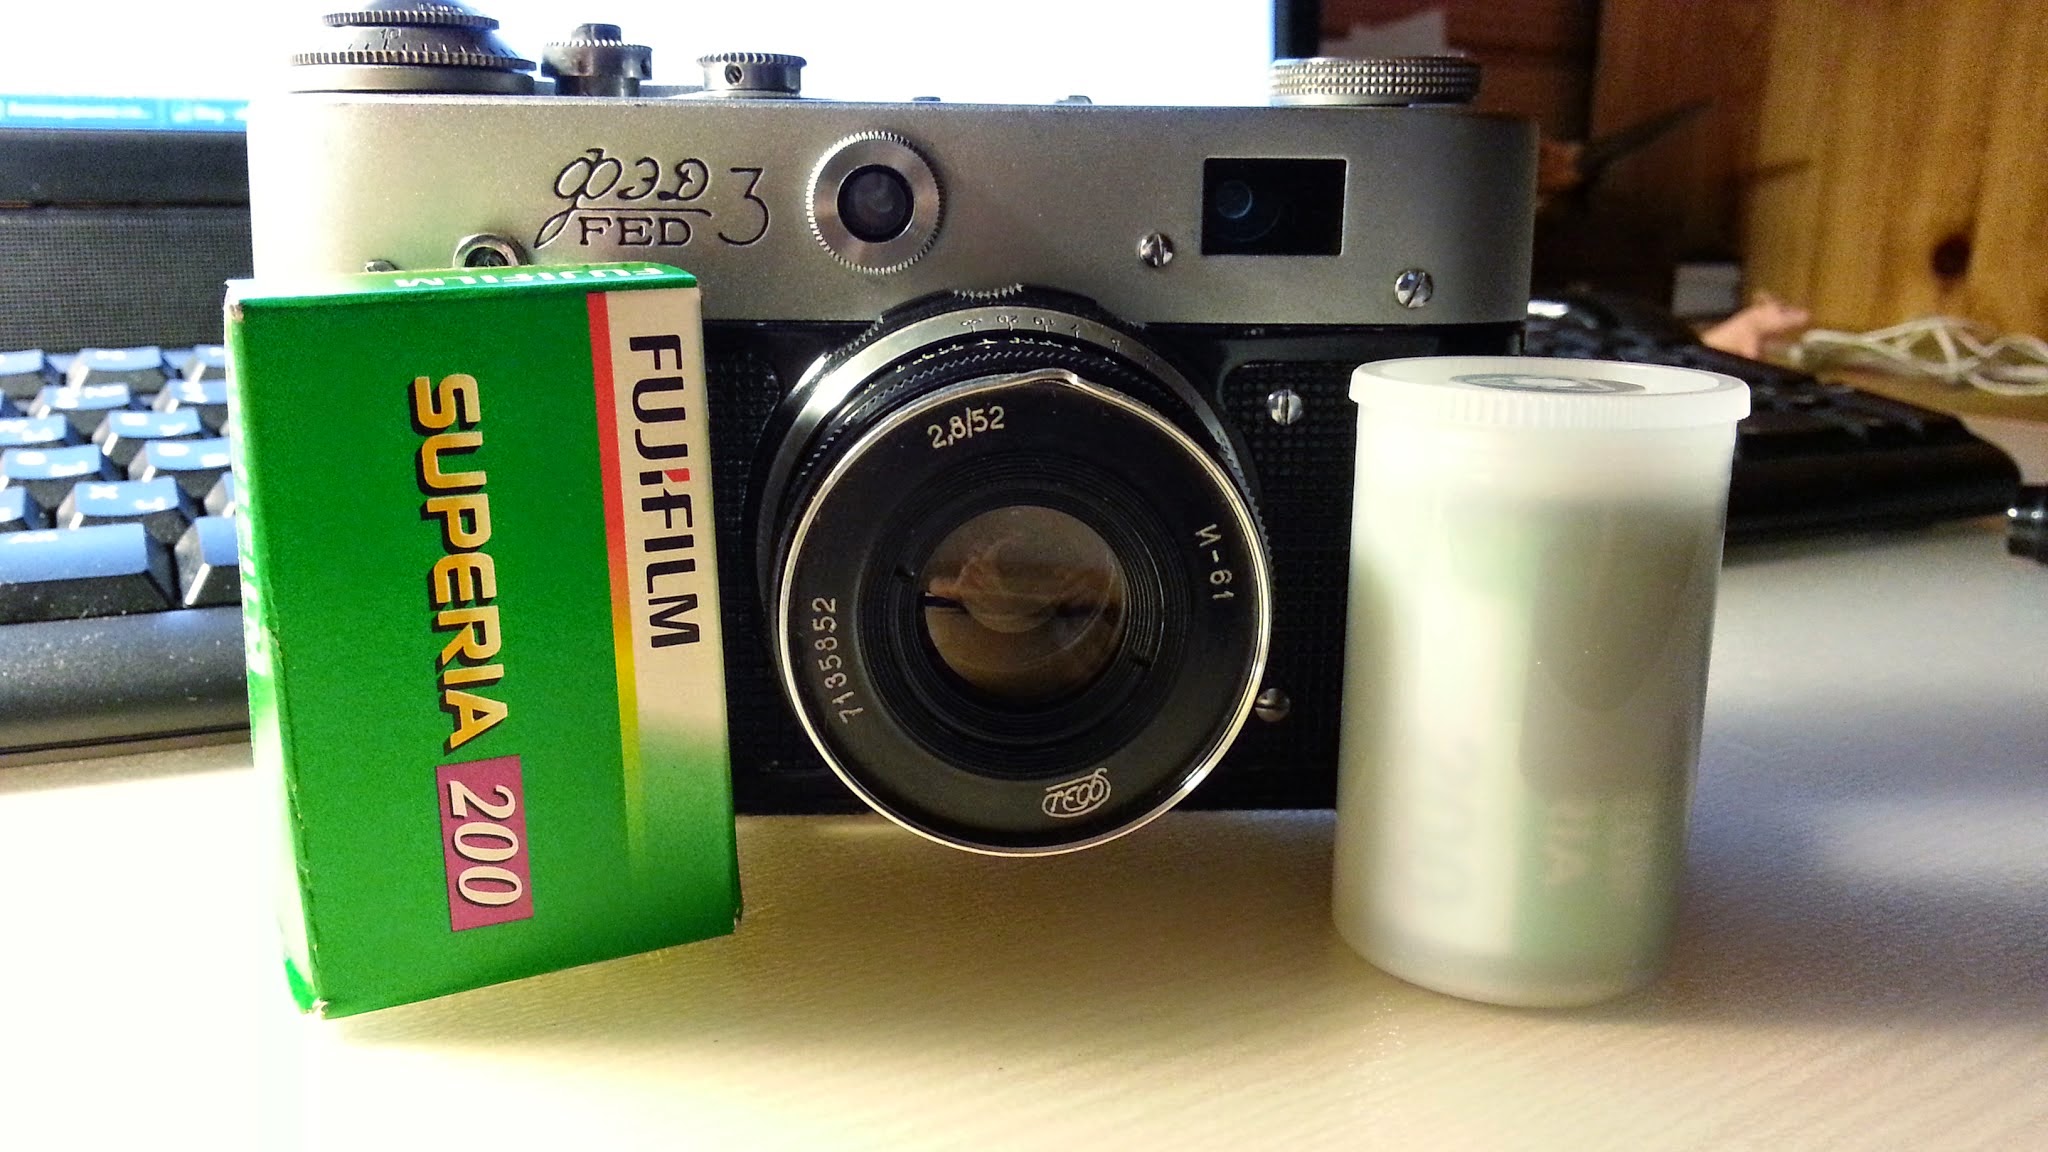 Фотоаппарат ФЭД 3 и пленка Fujifil Superia 200. Снято Panasonic Lumix GF1.